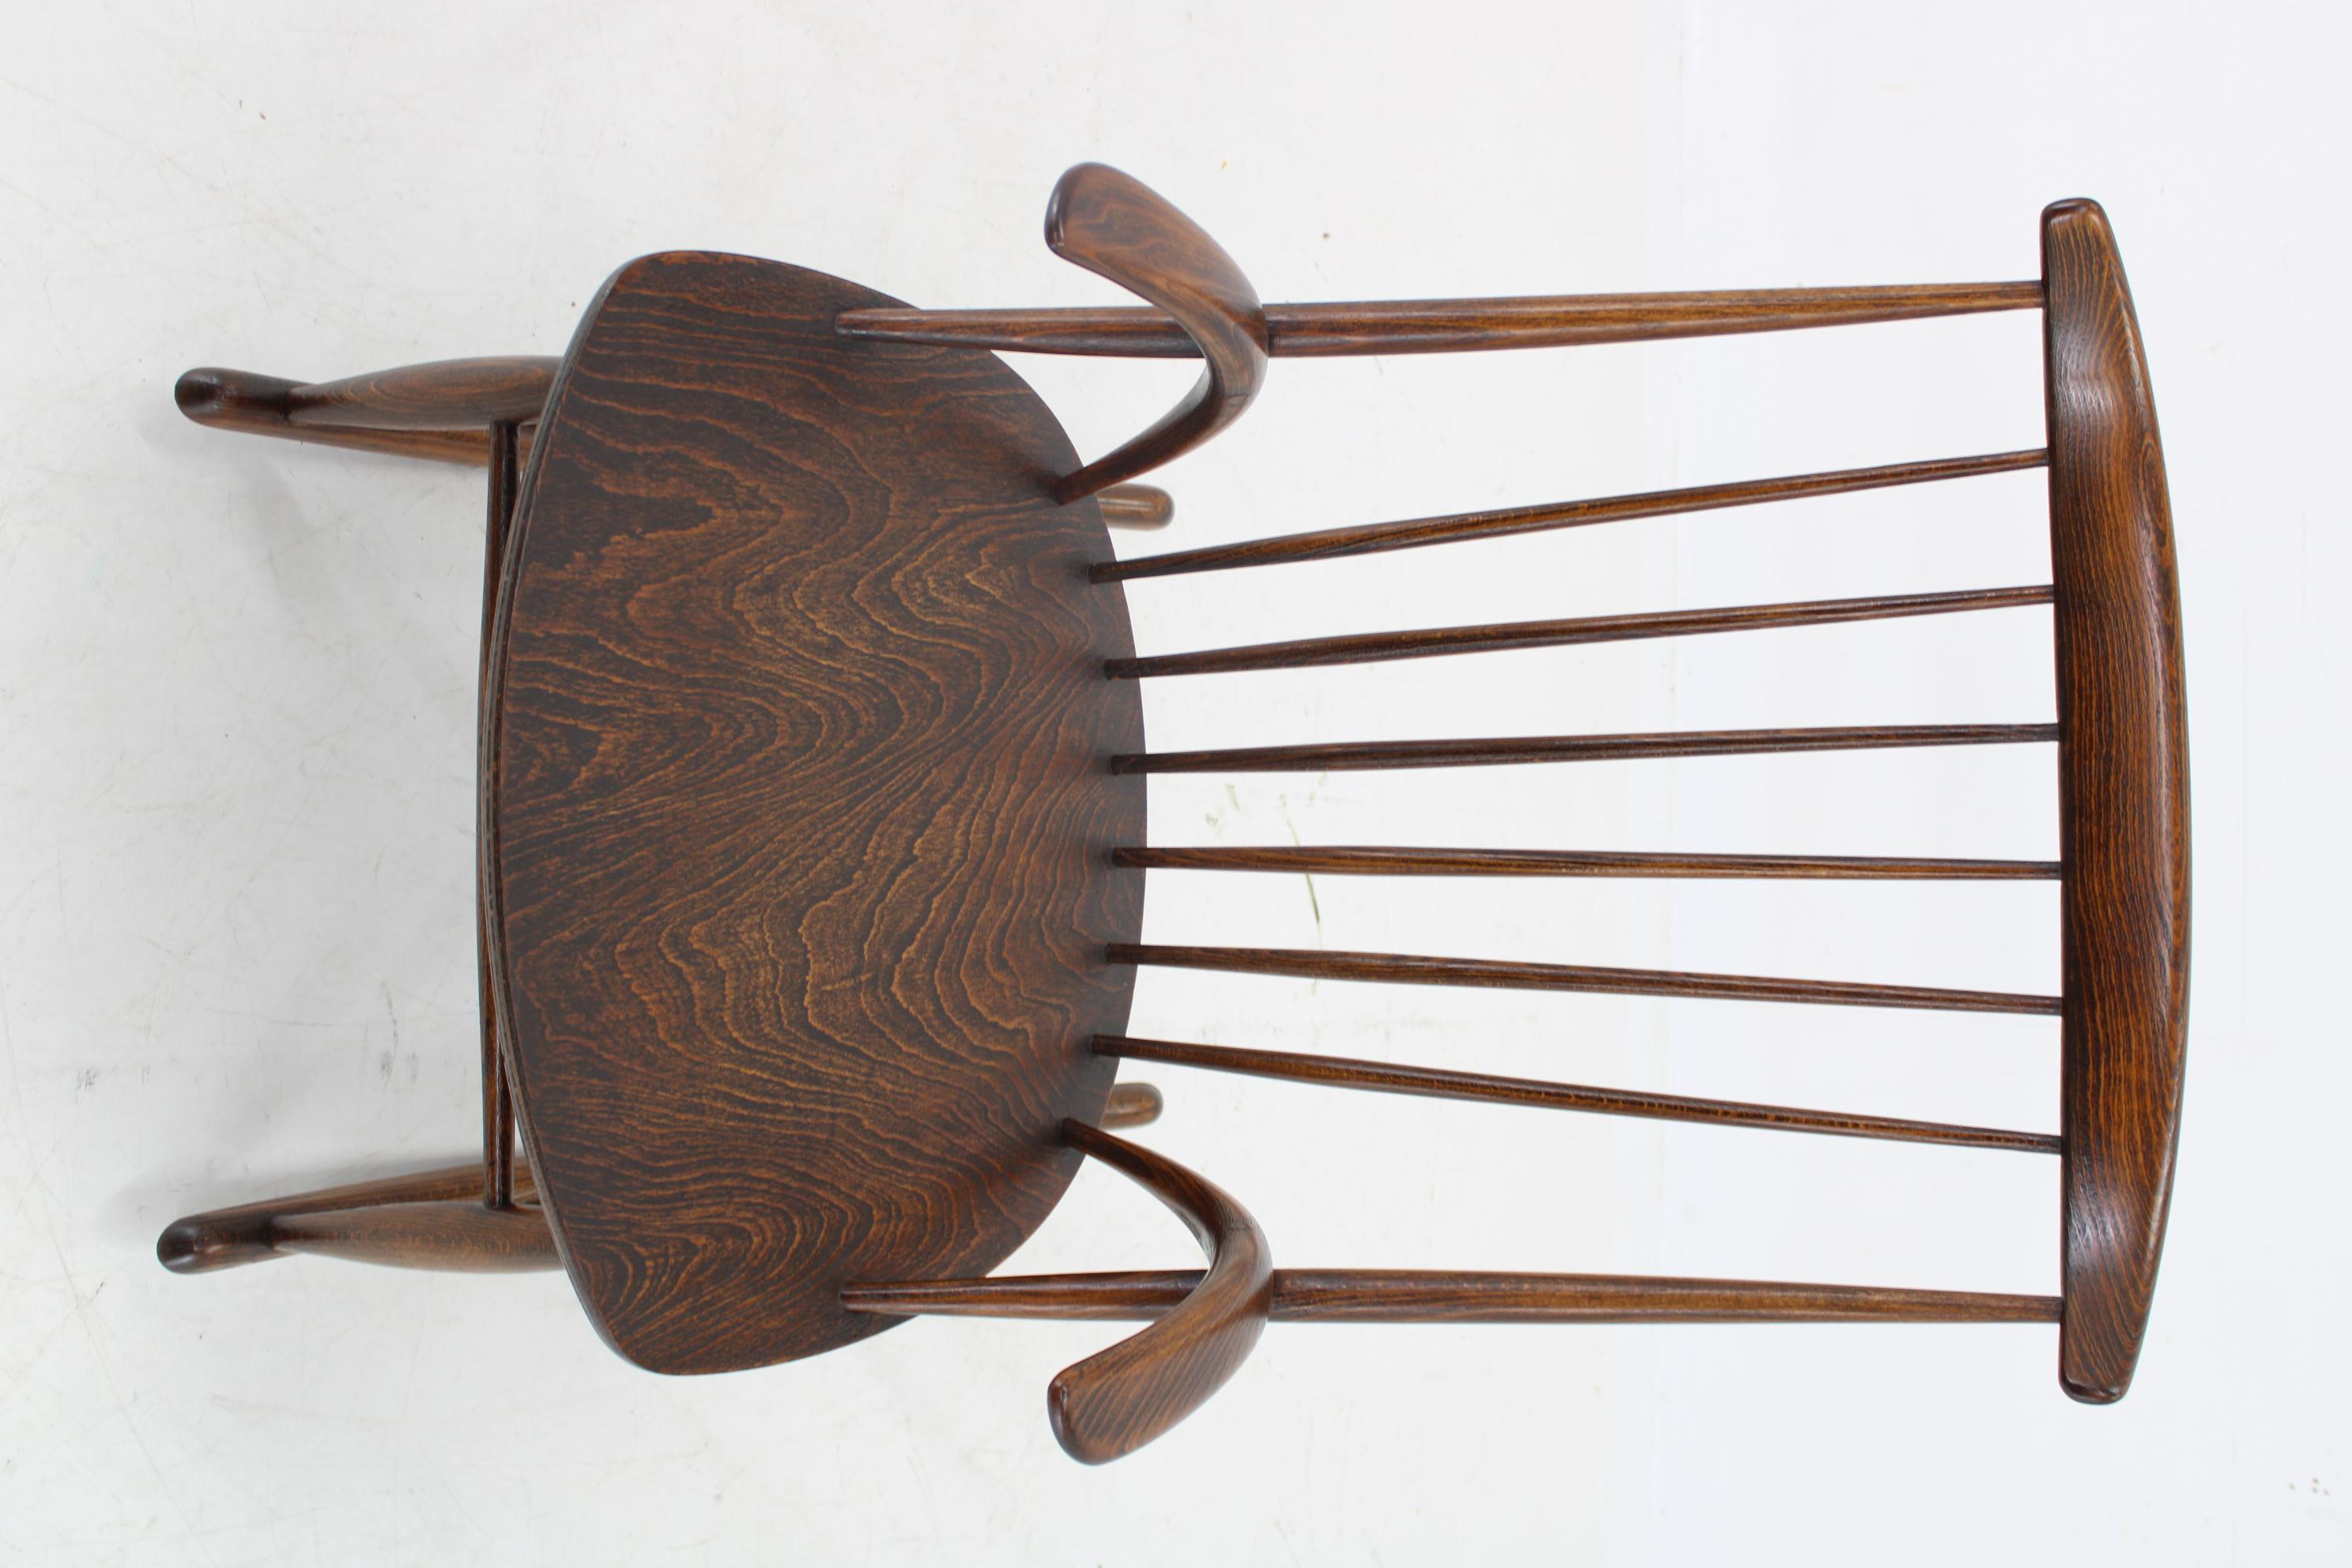 1960s Illum Wikkelso Gyngestol No. 3 Rocking Chair for Niels Eilersen, Denmark For Sale 1